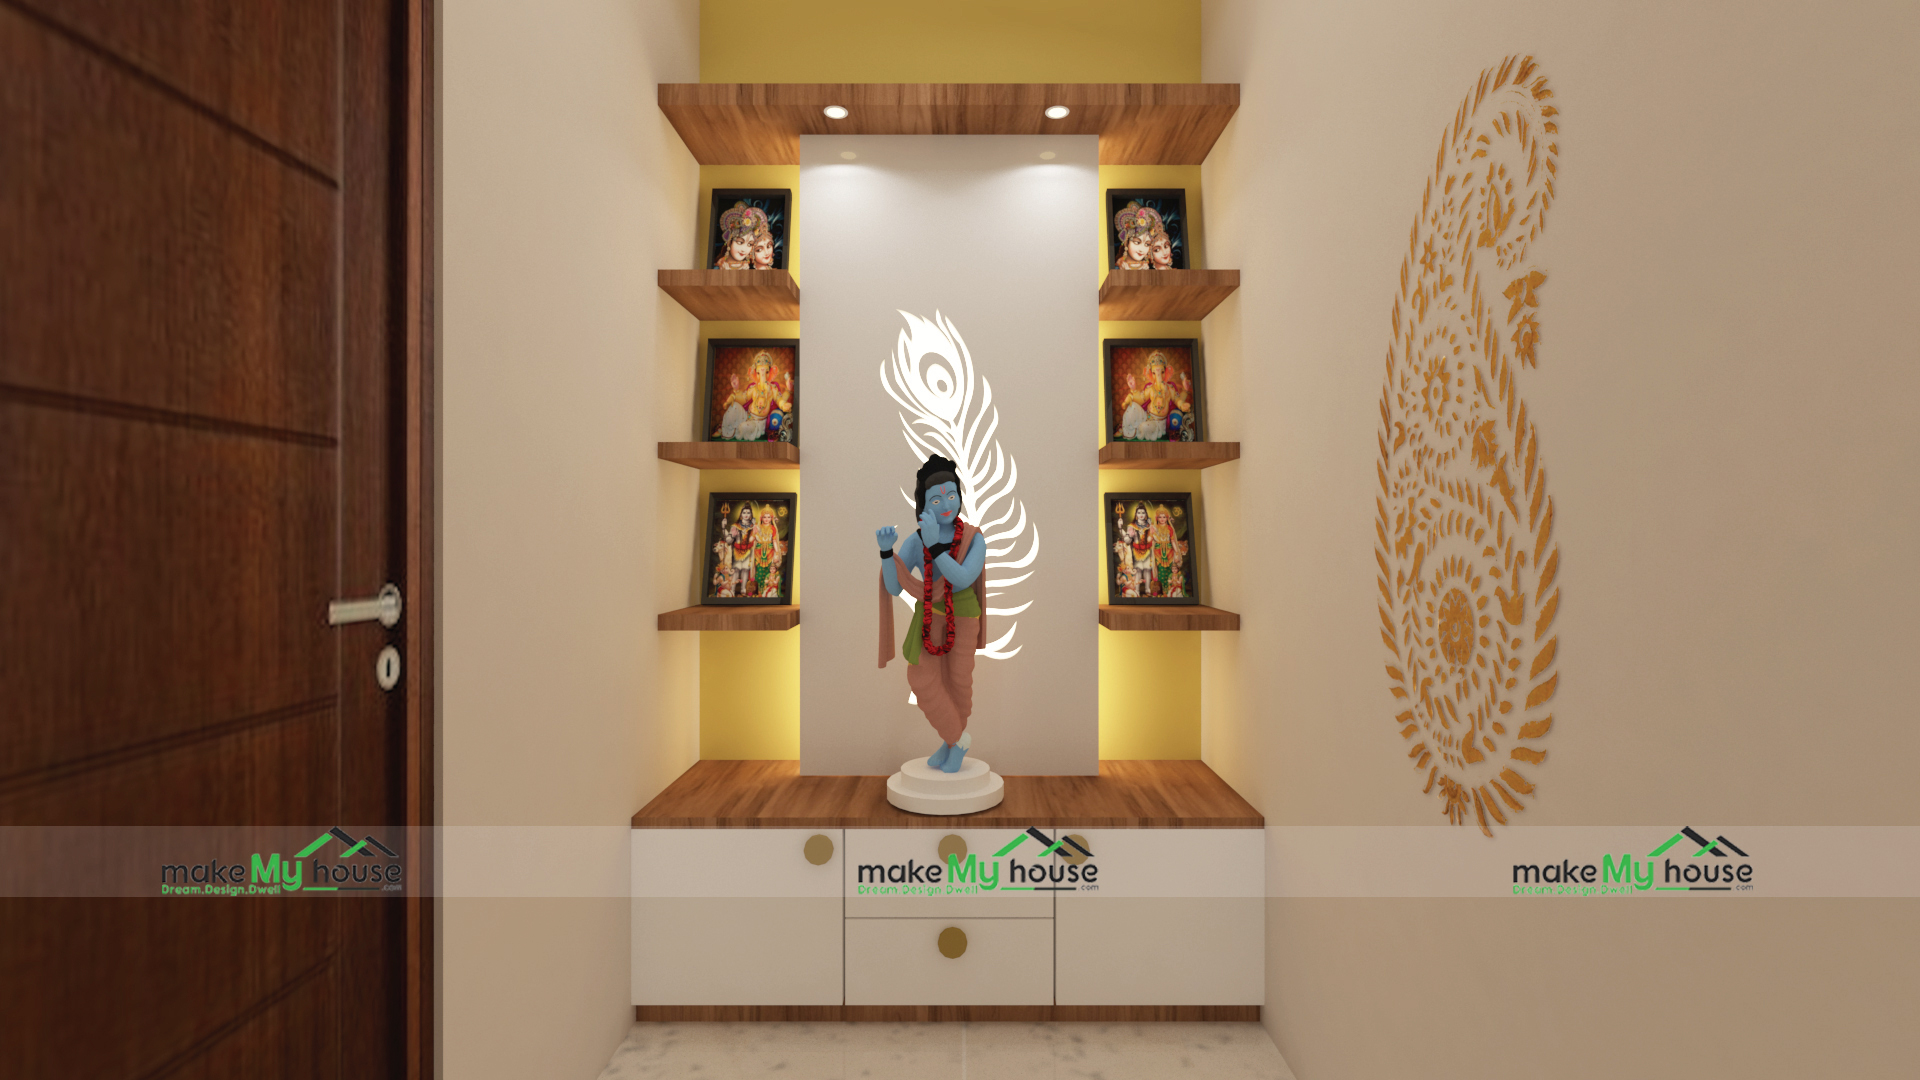 Pooja Room Door Designs for Indian Homes 2023 - Decorpot Home Interiors